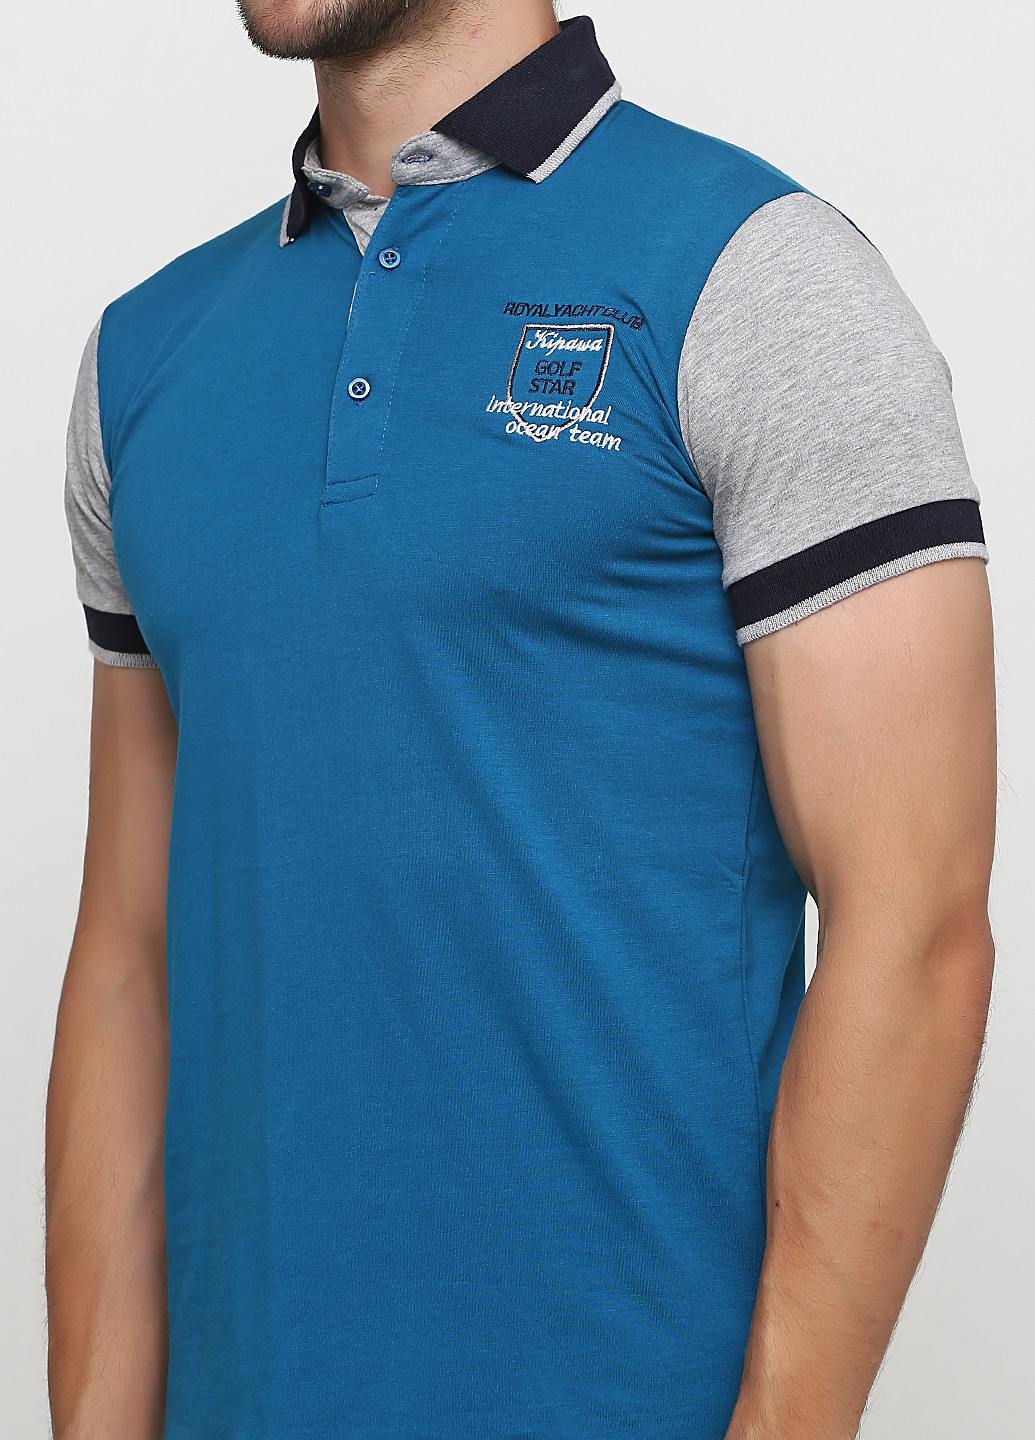 Голубой футболка-поло для мужчин Golf однотонная